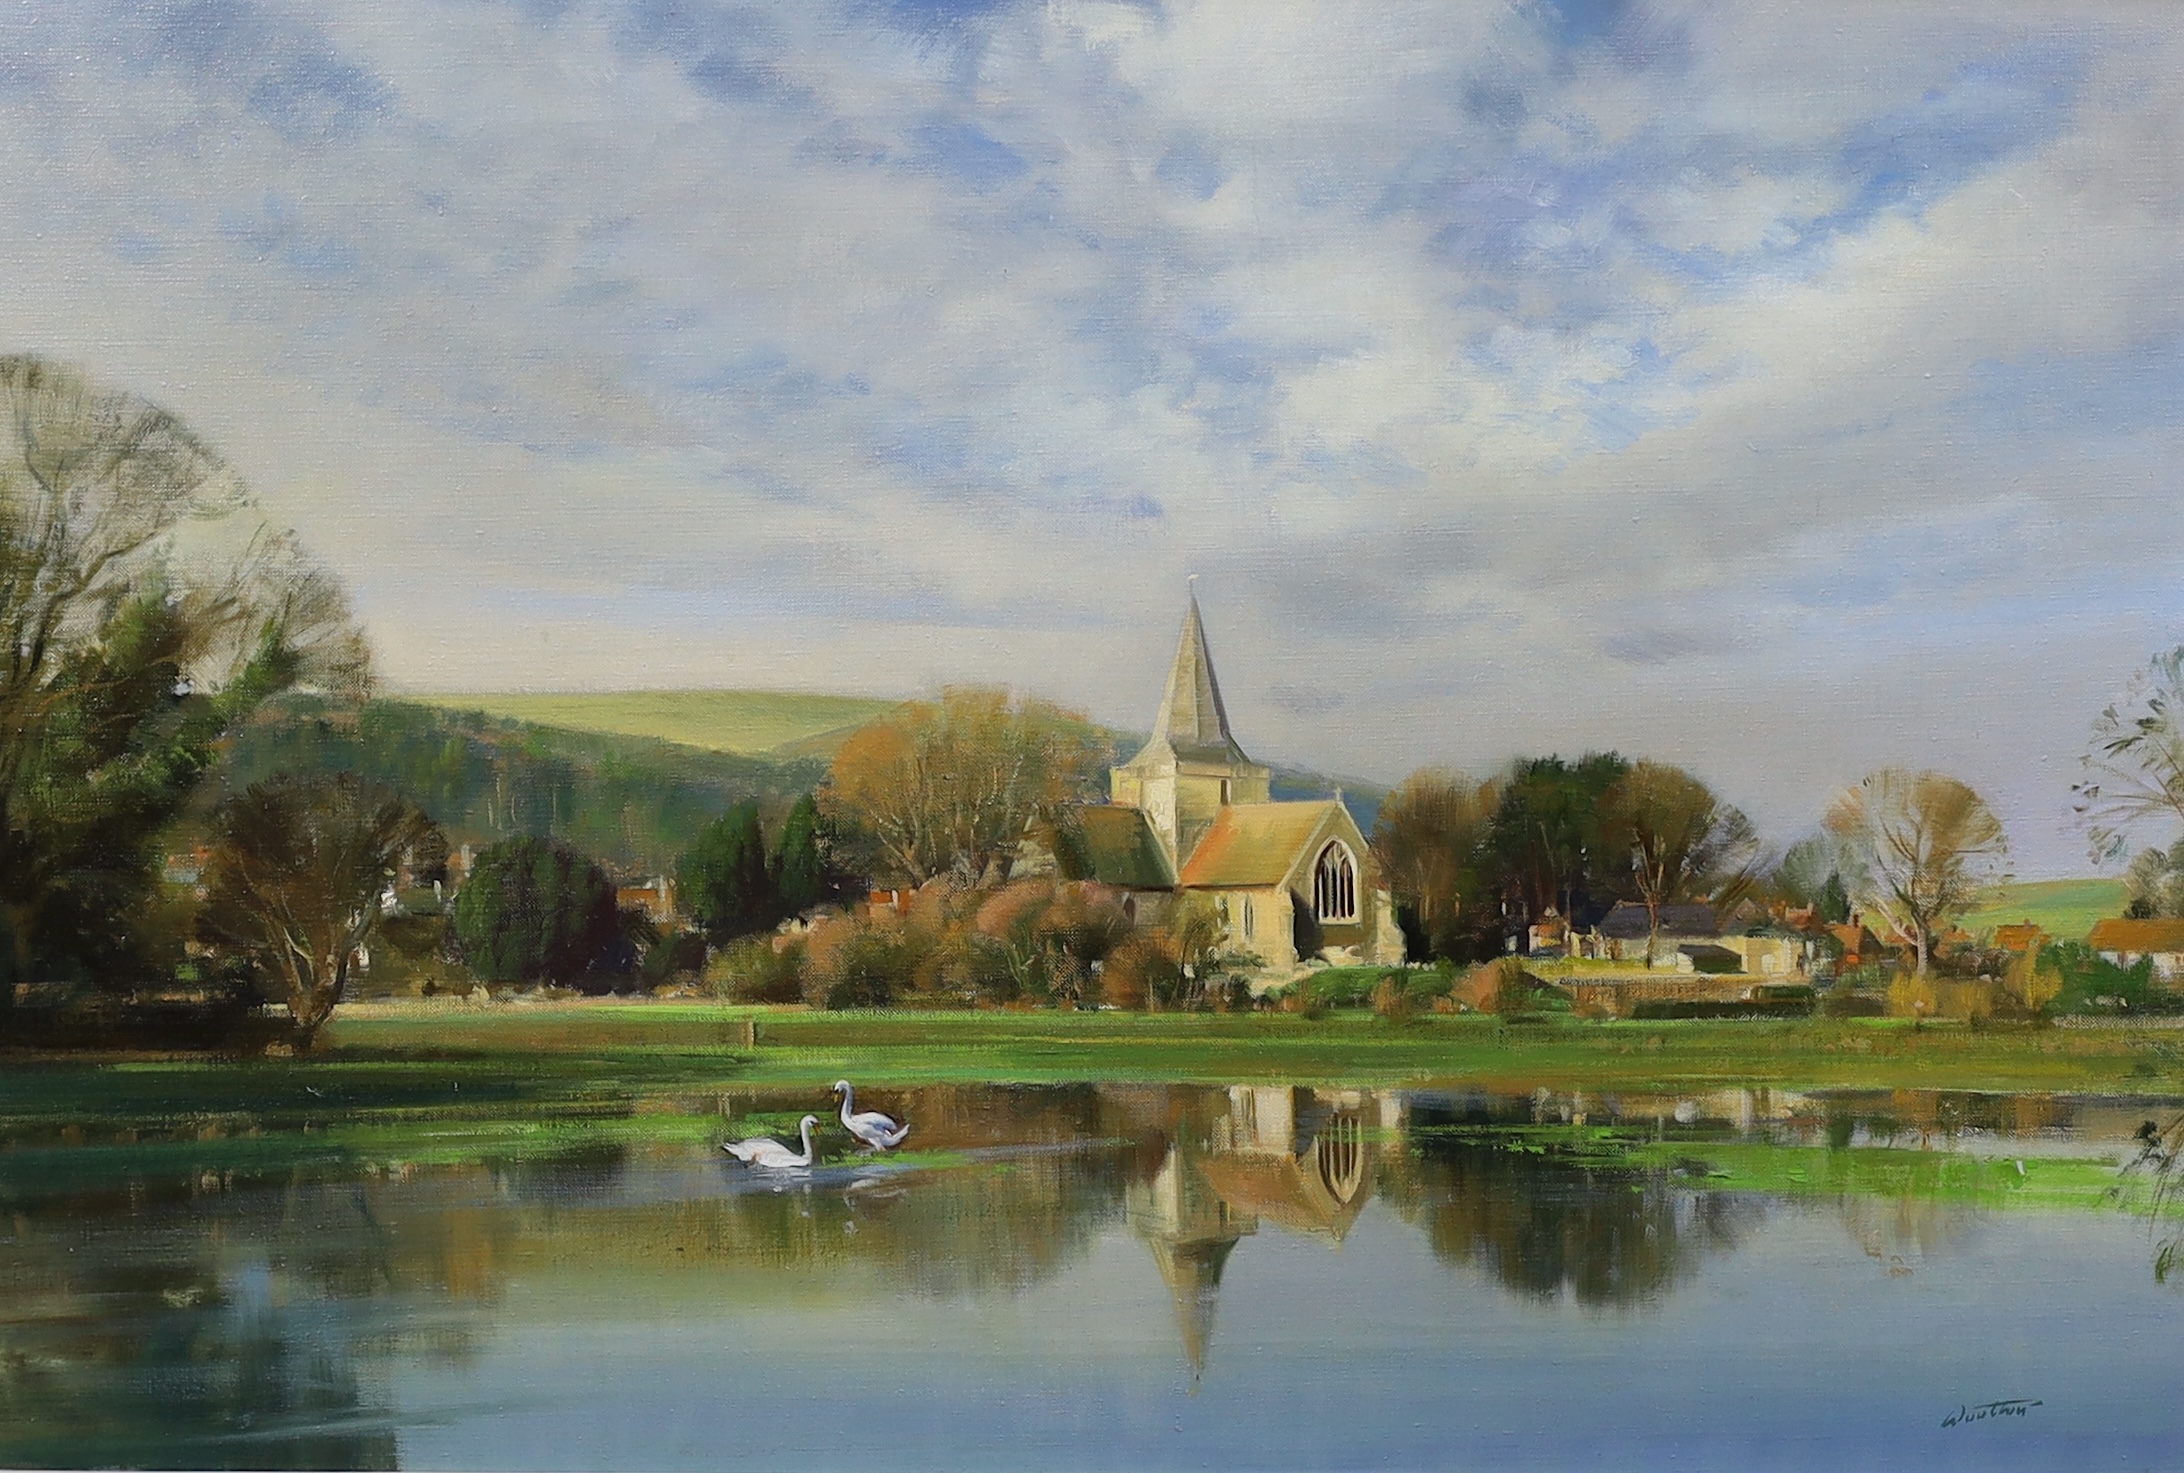 Frank Wootton (English, 1914-1998), ‘Alfriston in autumn', oil on canvas, 50 x 75cm